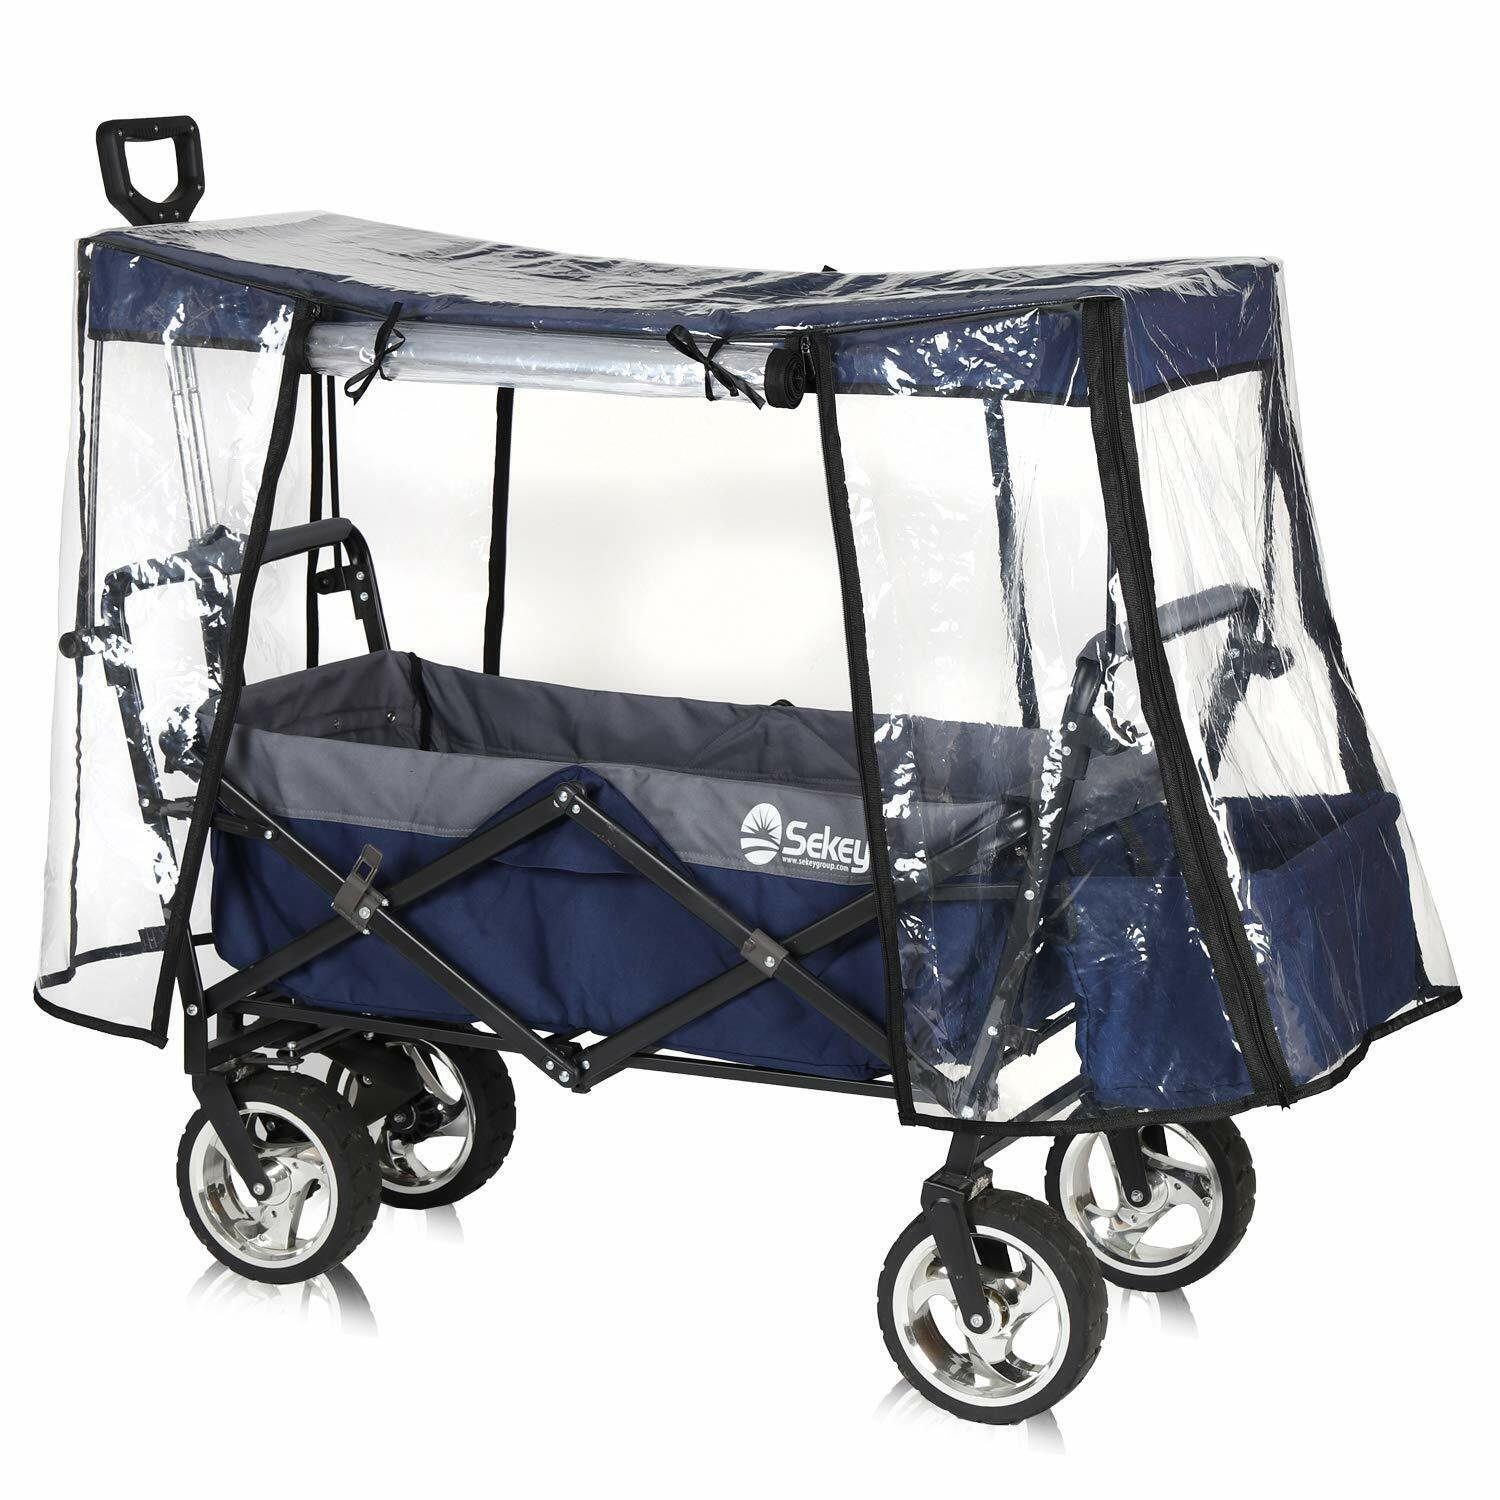 Sekey Kinderwagen-Regenschutzhülle Regenschutzhülle Schutzhülle für  Bollerwagen Faltbar - Wetterschutz